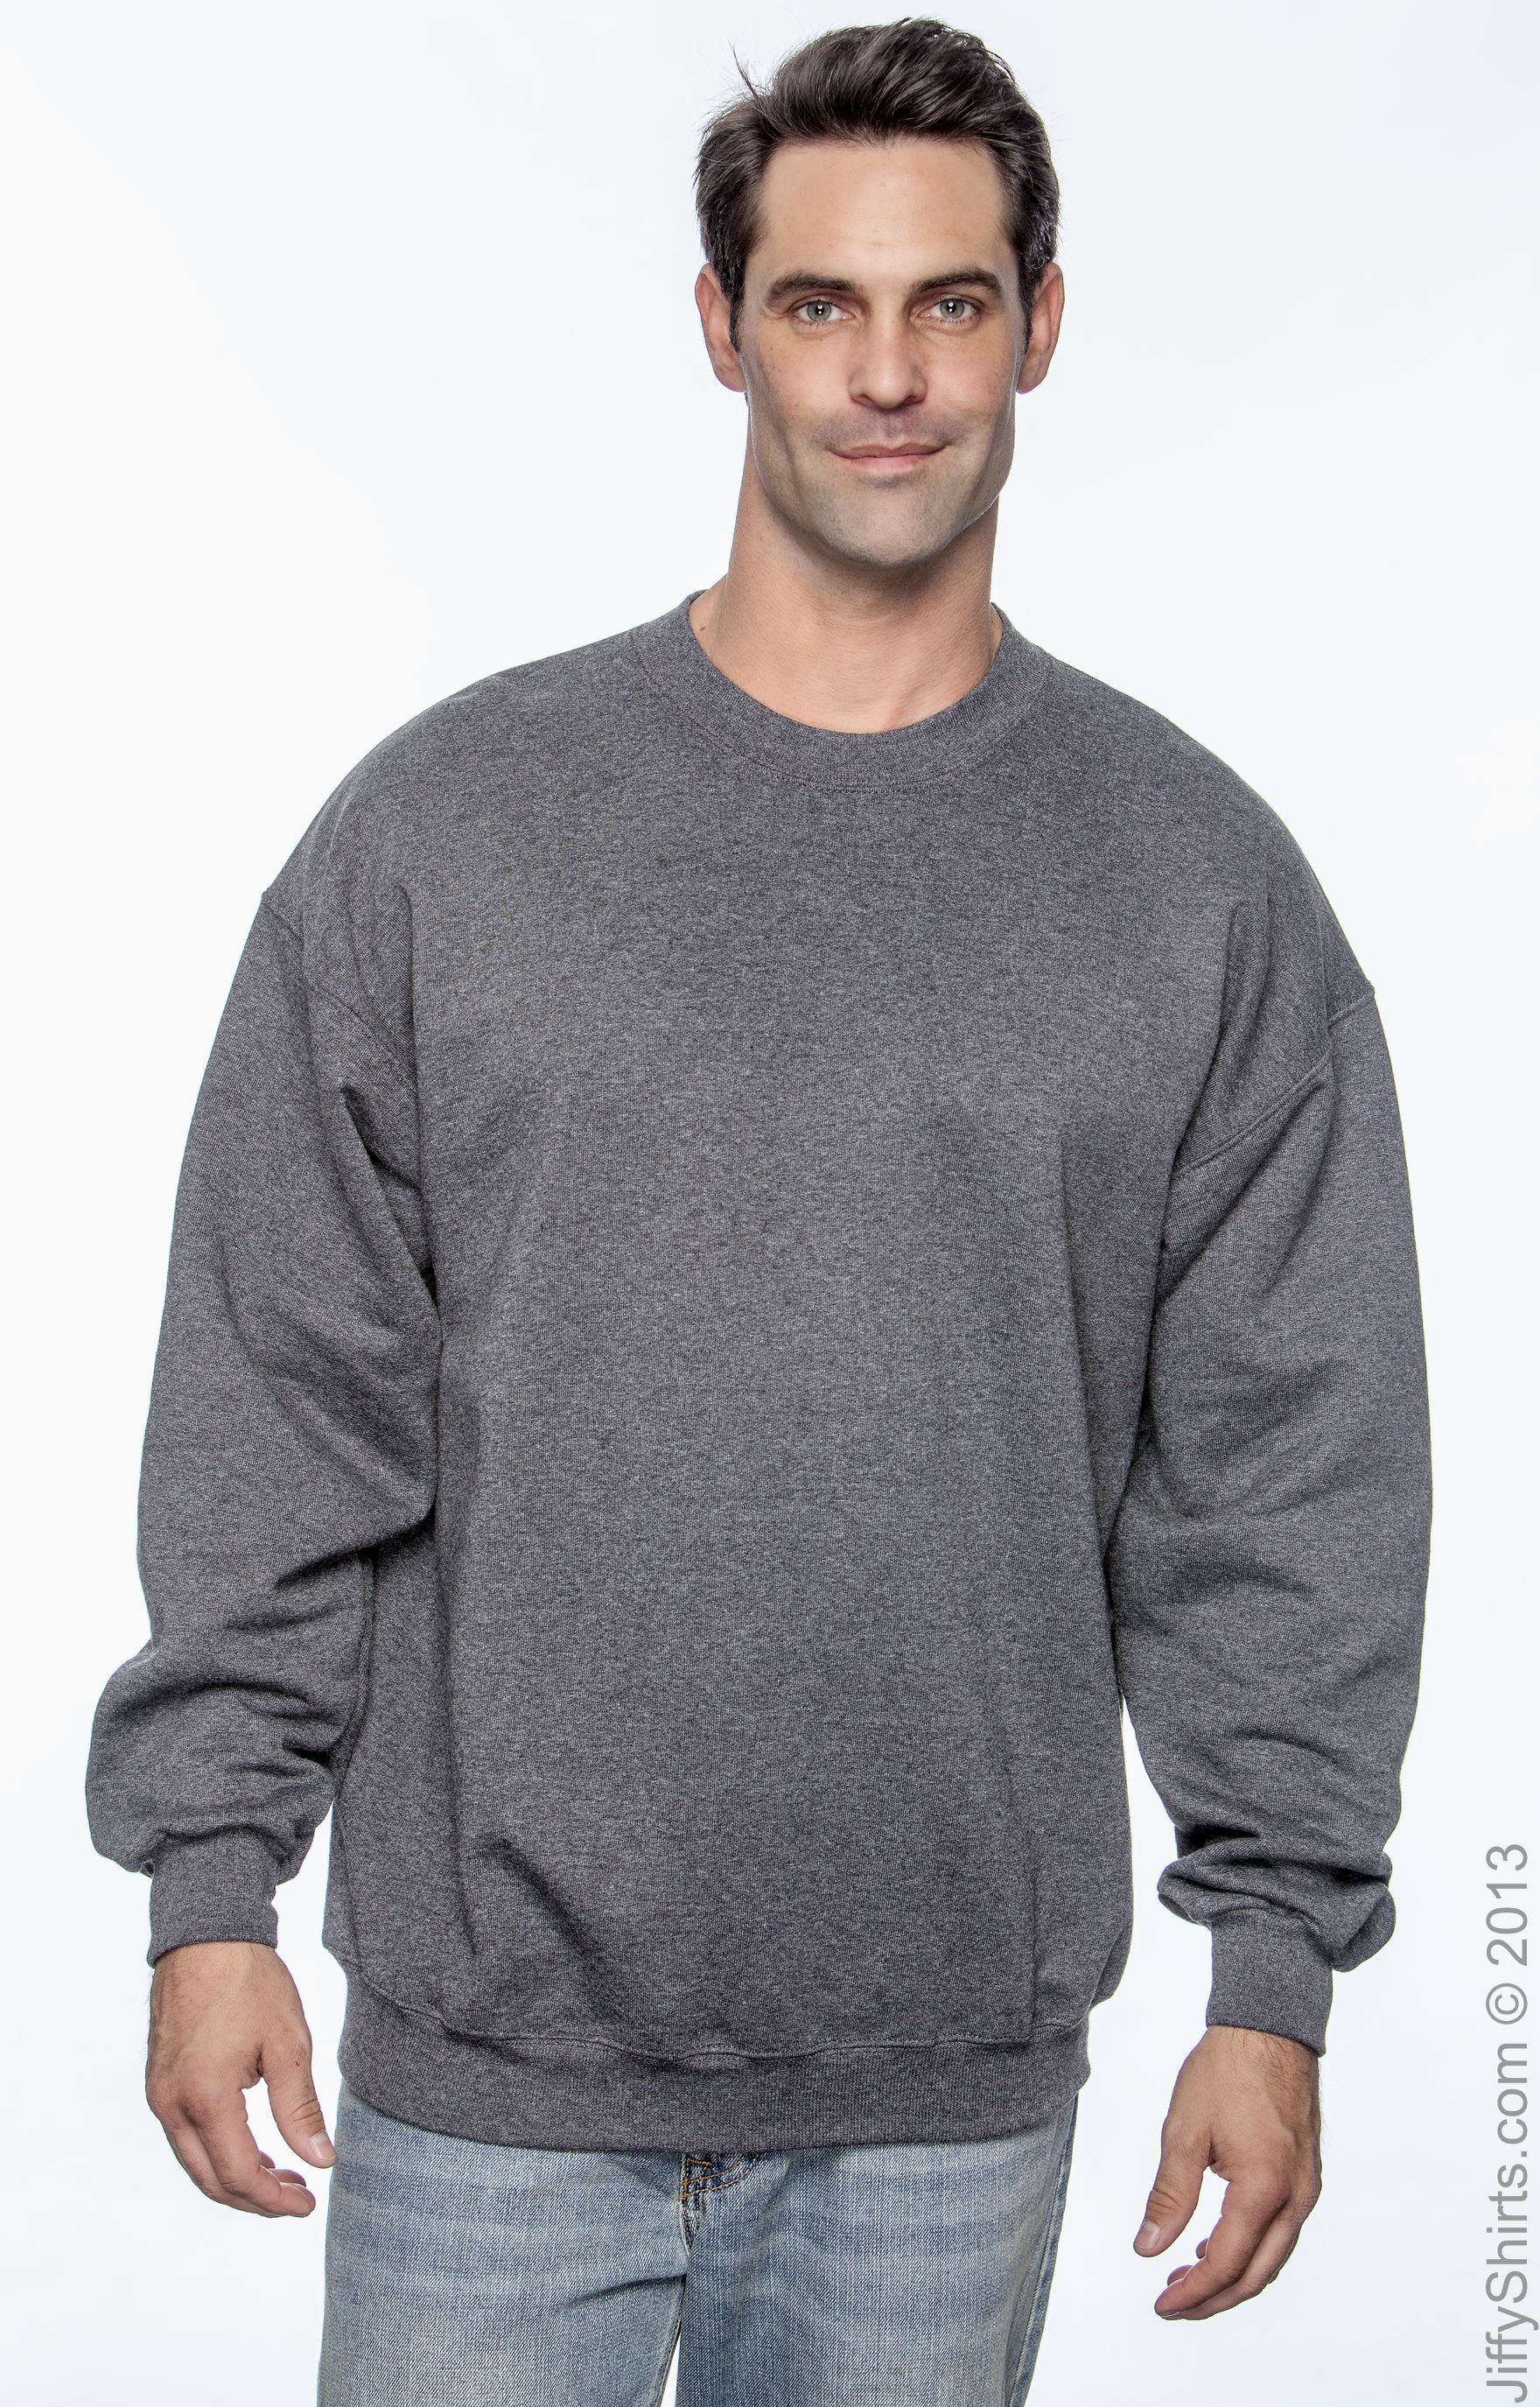 Hanes Tagless Organic Cotton Sweatshirt Jumper No Logo